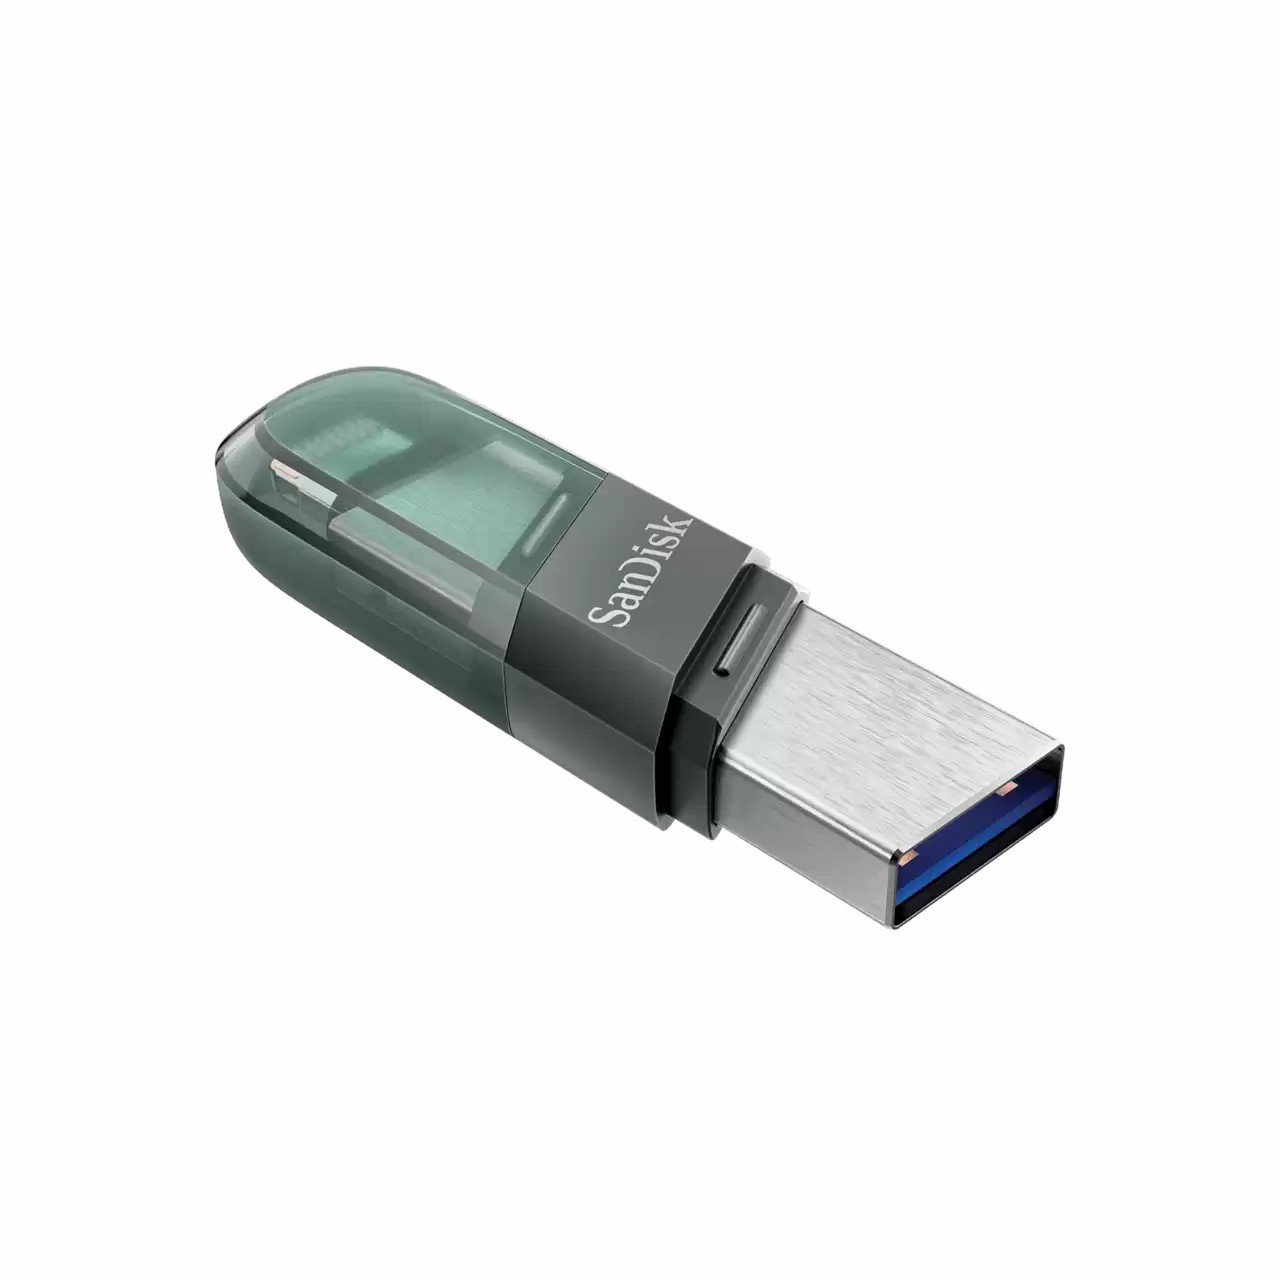 Sandisk iXpand USB Type A 3.1 and Lightning Flash Drive, 32GB, Green - SDIX90N-032G-GN6NN